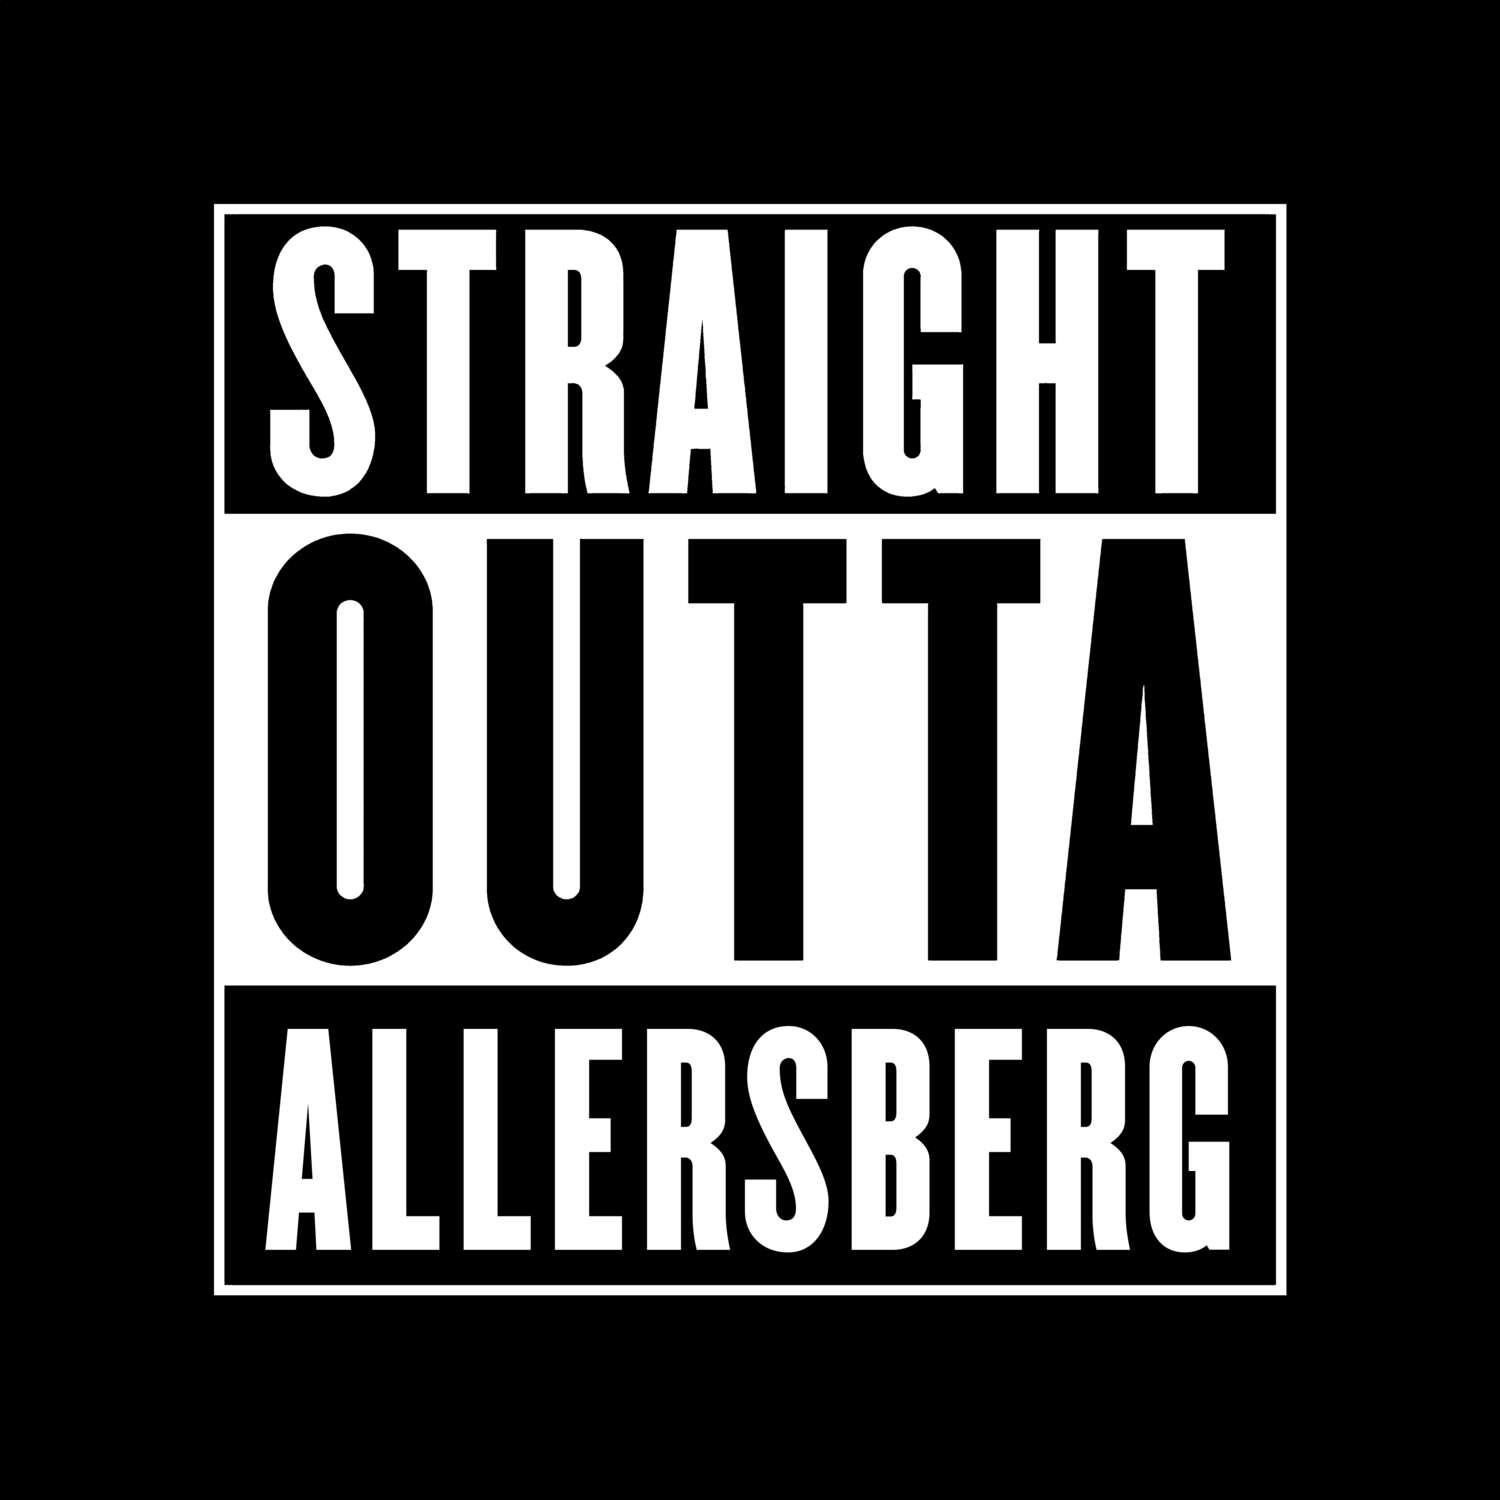 Allersberg T-Shirt »Straight Outta«